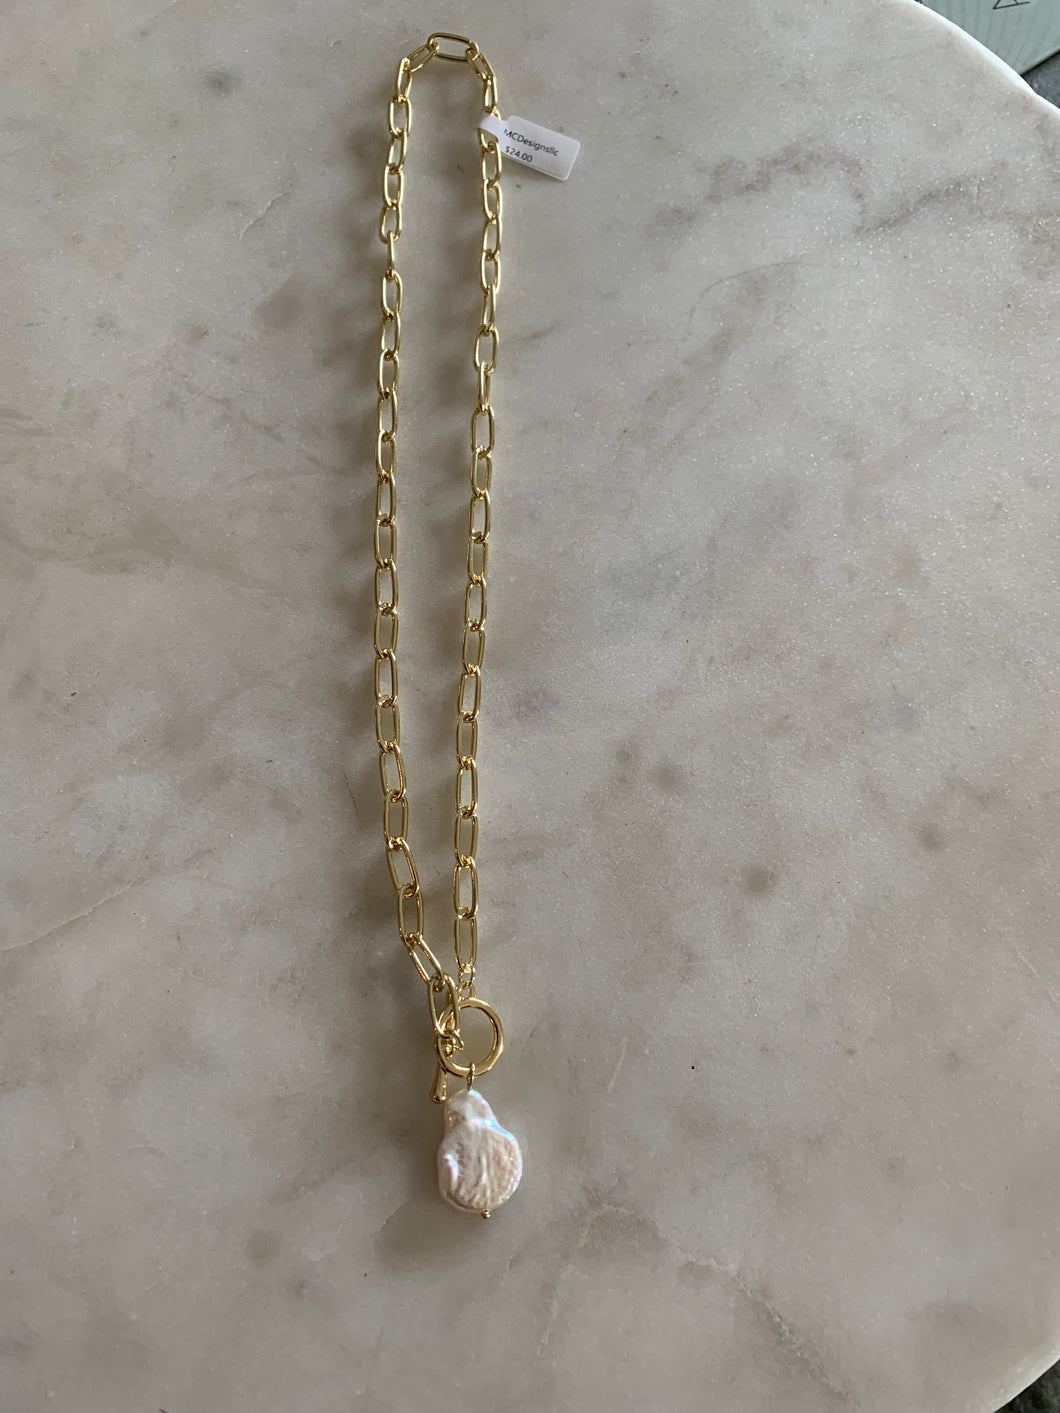 Shell chain choker necklace